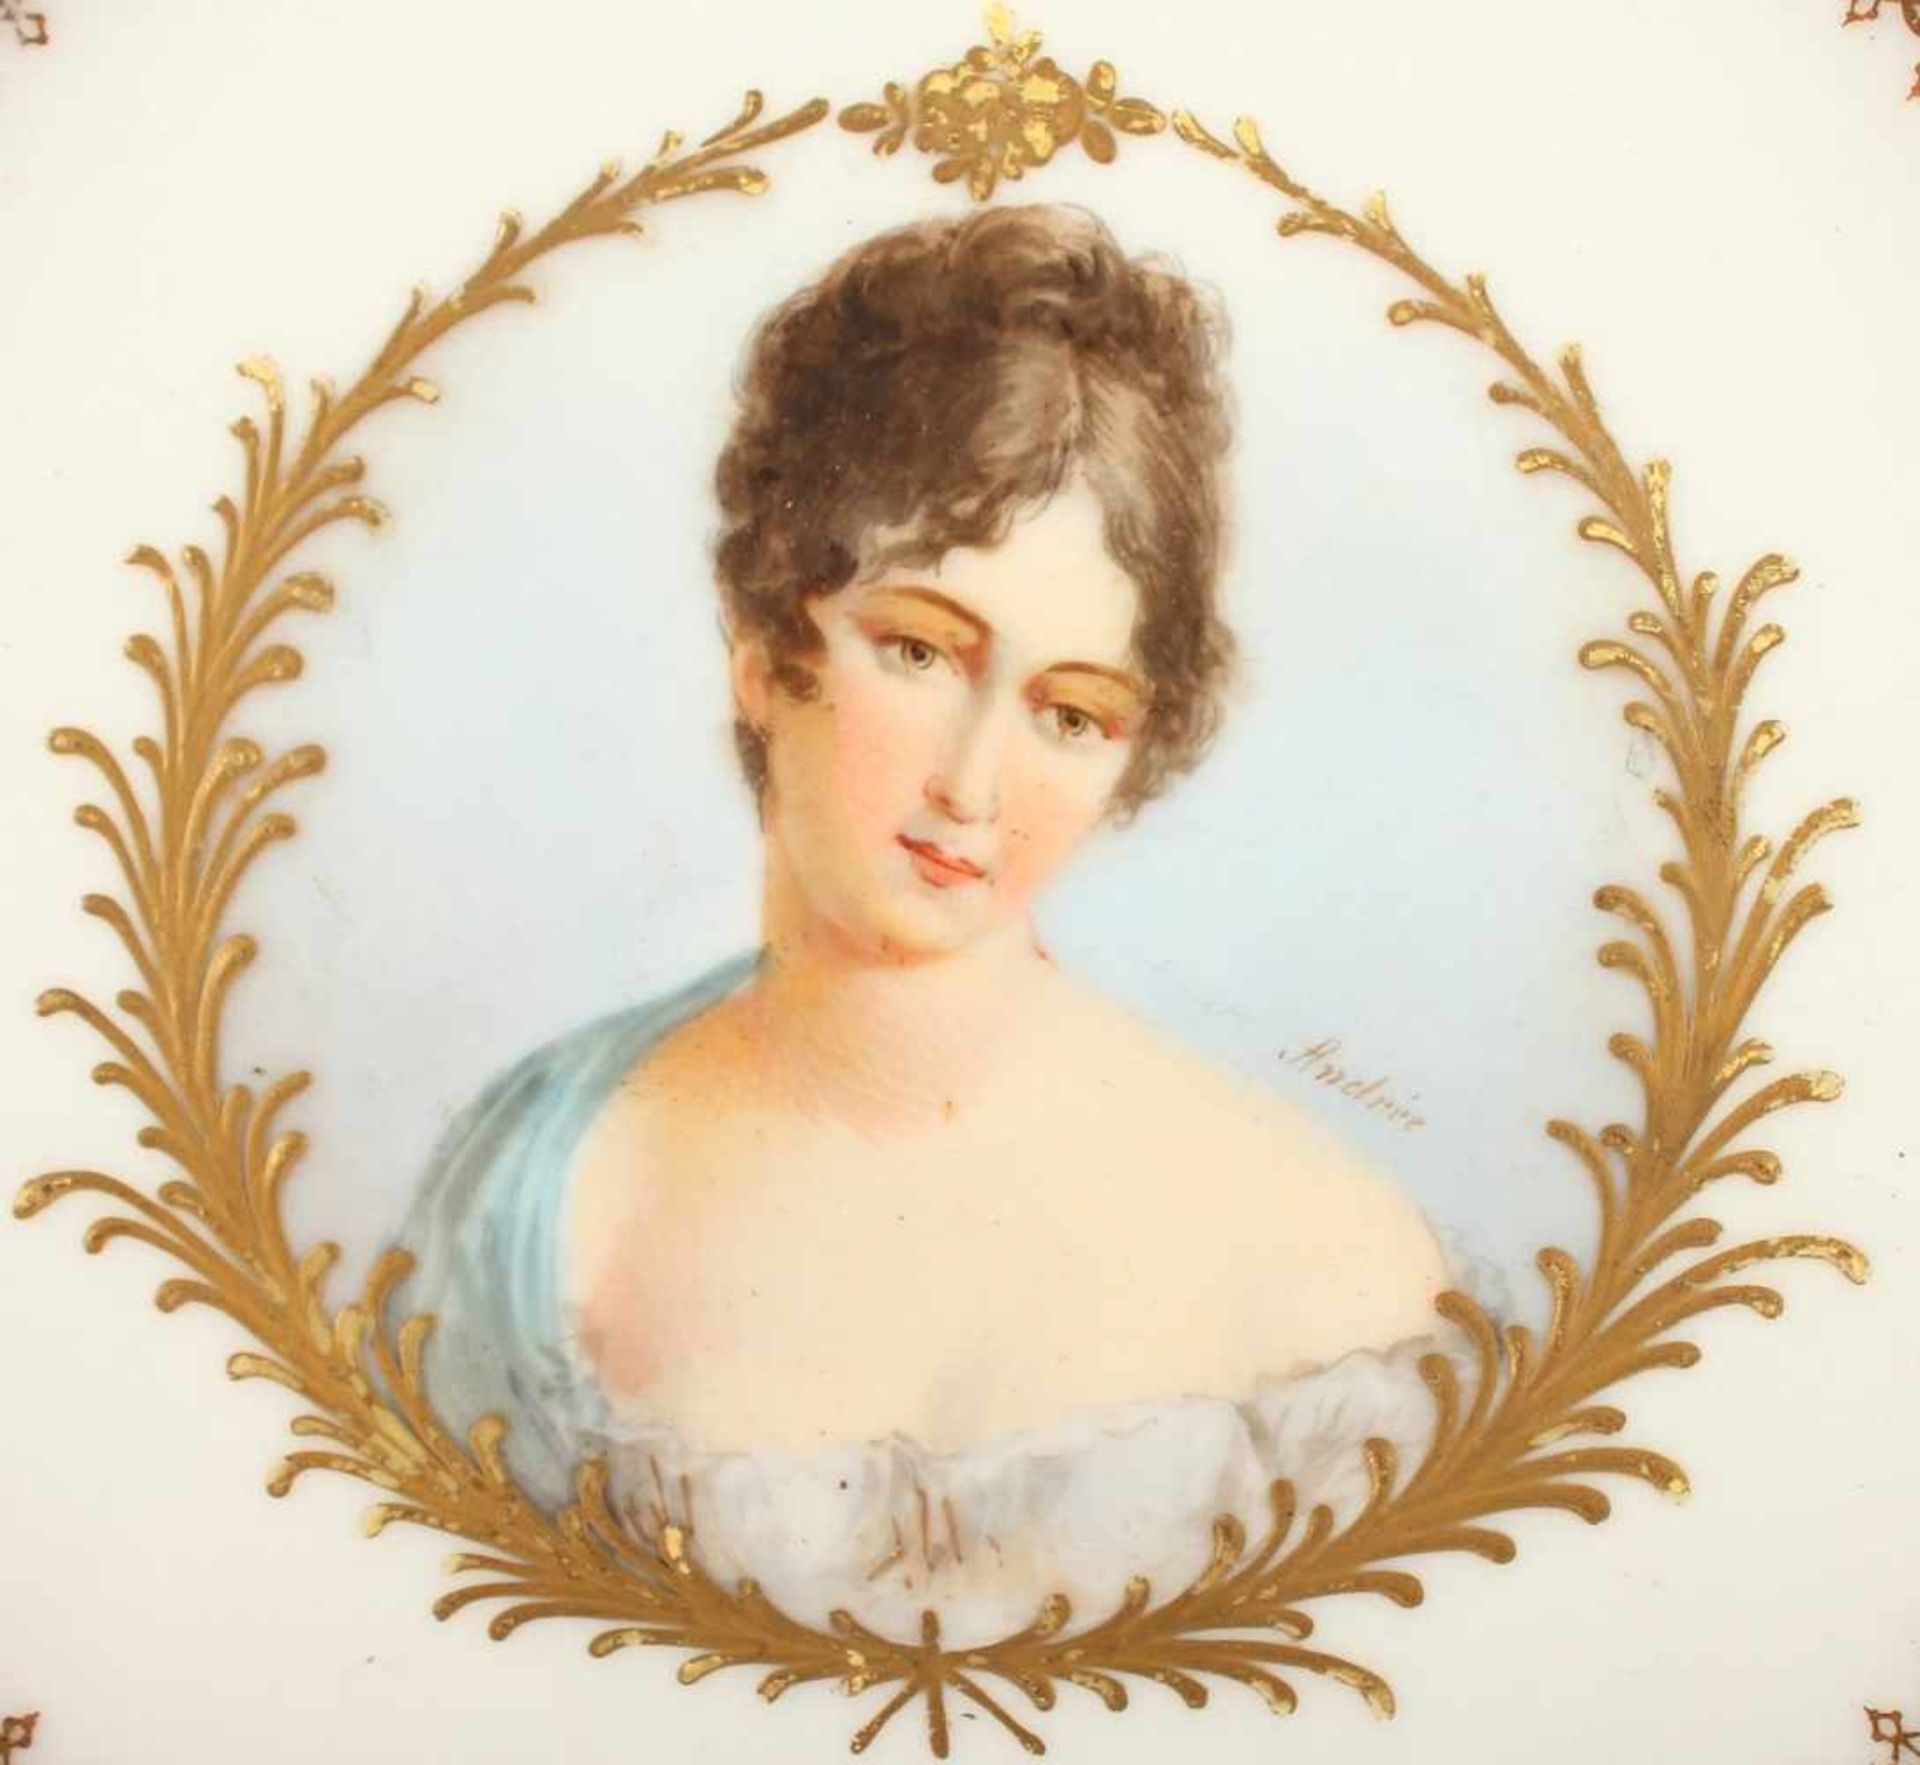 ZIERTELLER "MADAME RÉCAMIERE", im Spiegel polychrom gemaltes Portrait, sign. Andrée, - Image 3 of 3